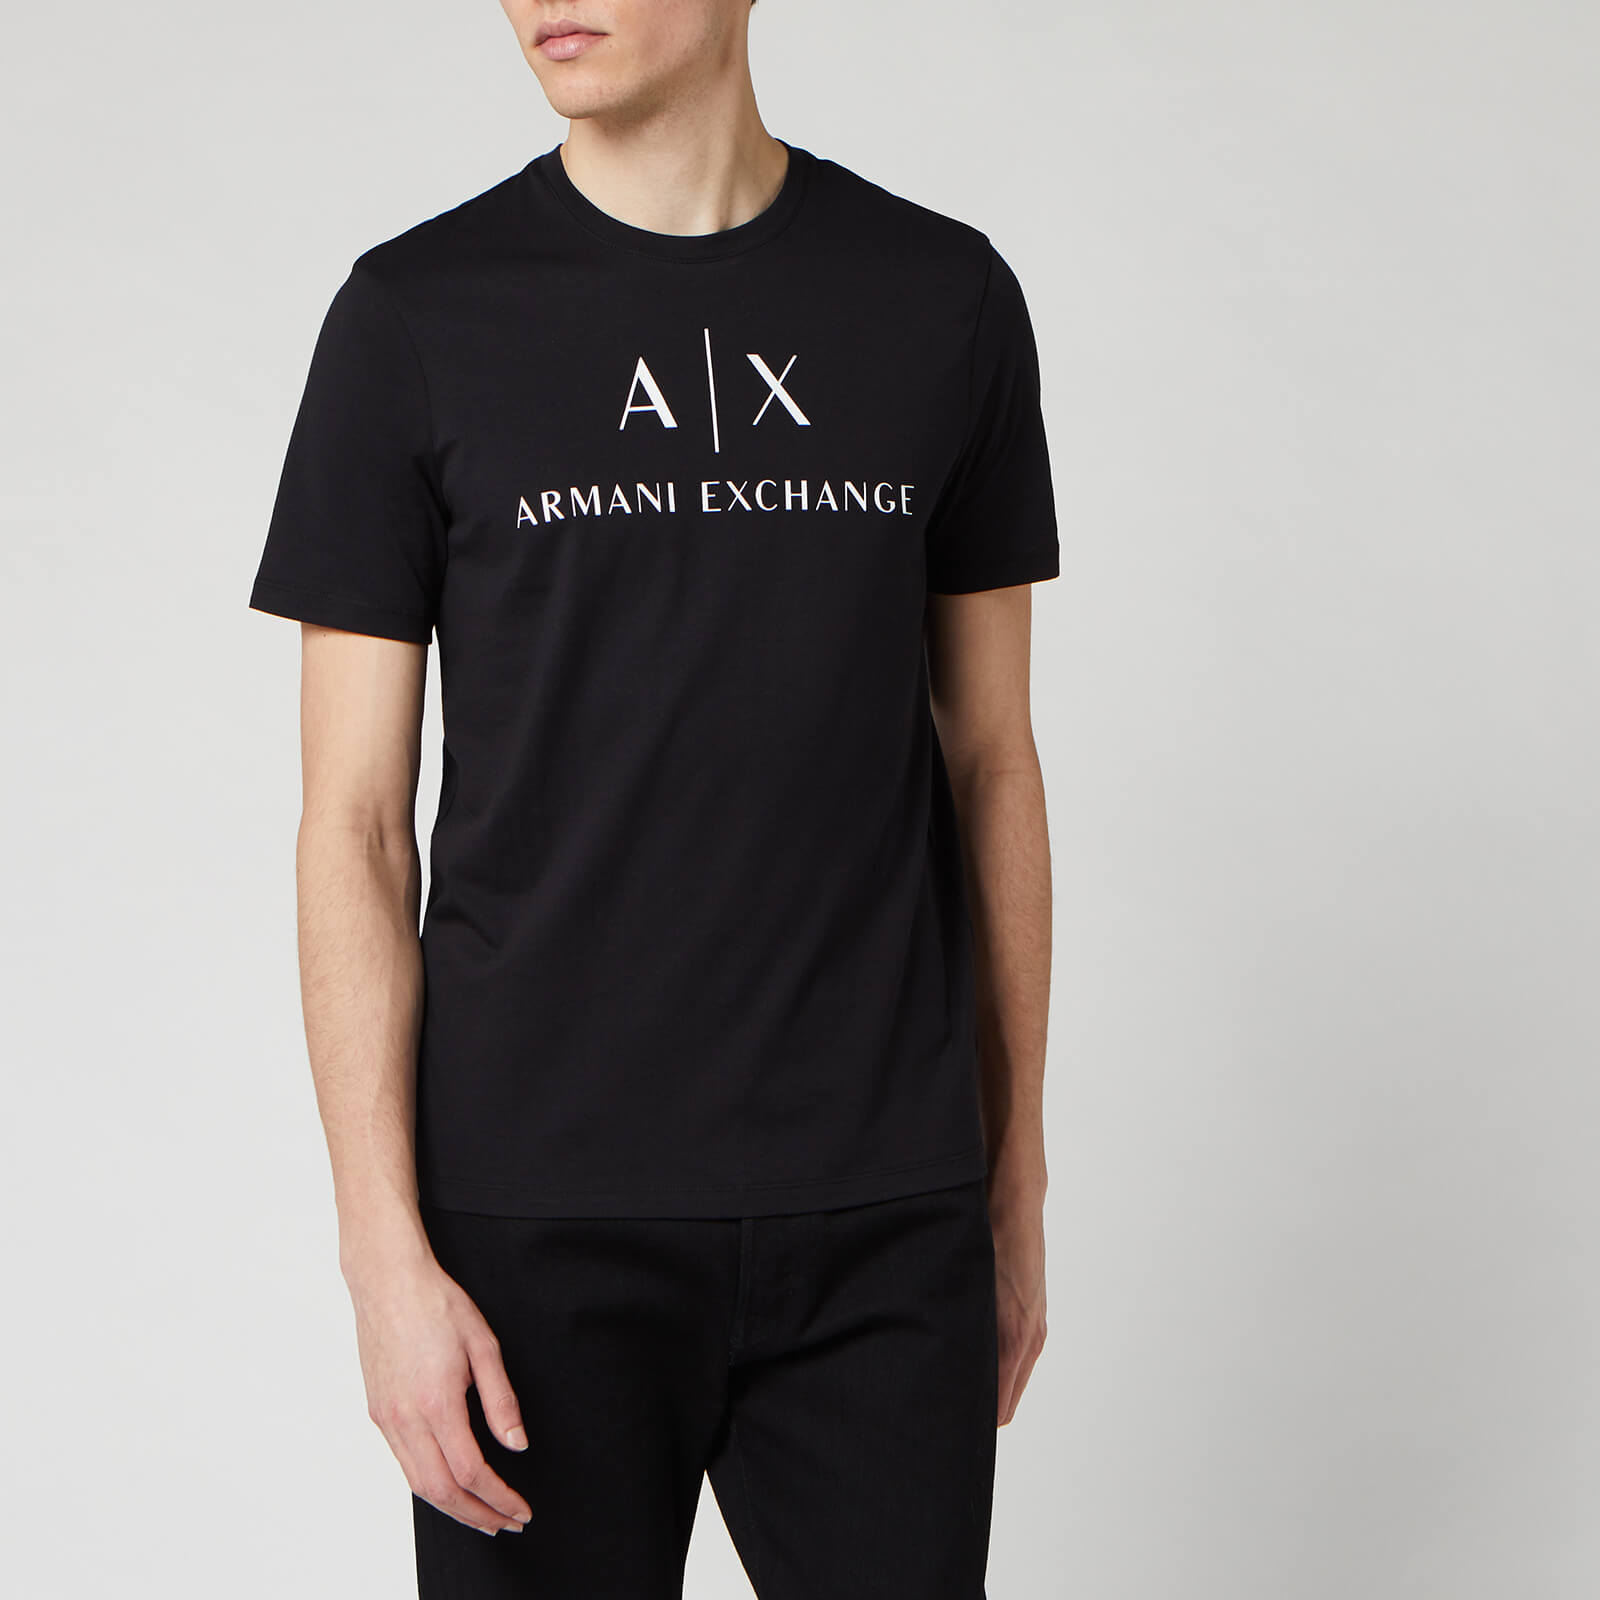 armani exchange t shirt mens sale